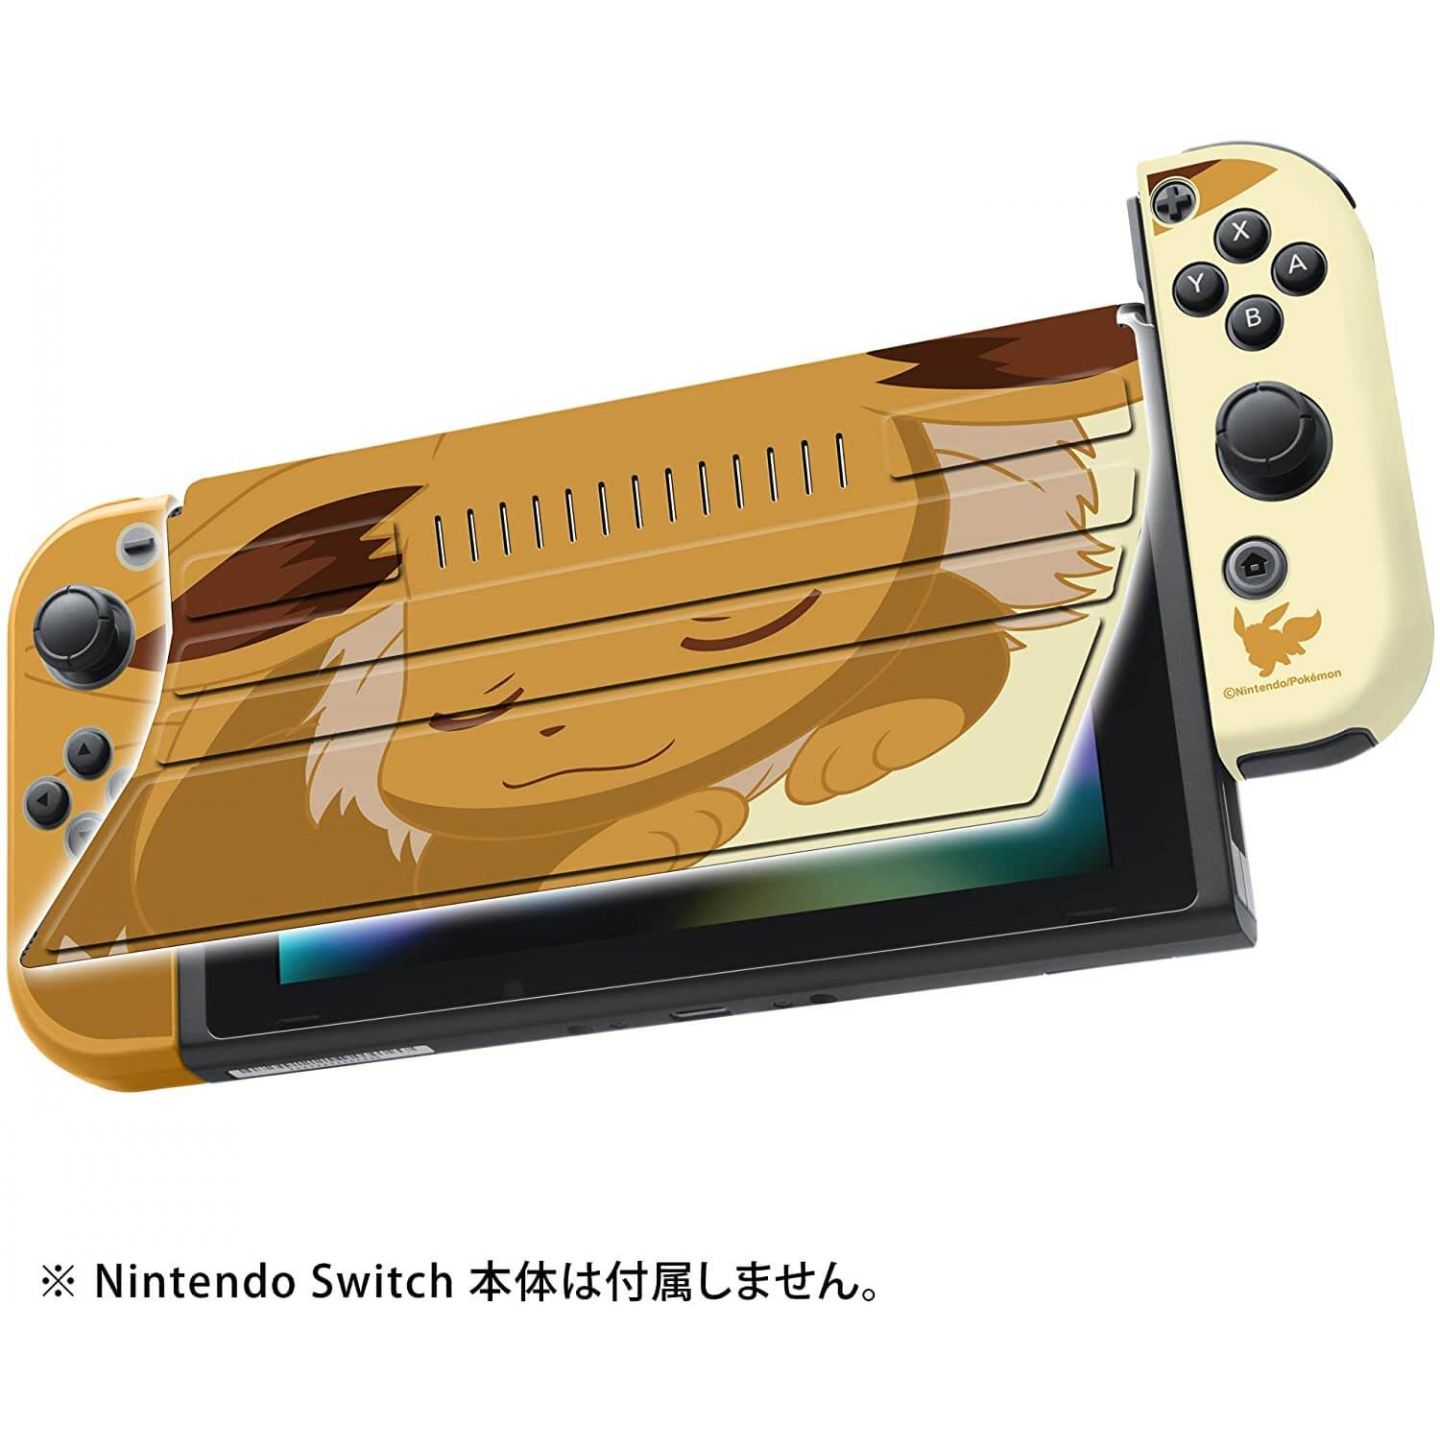 Keys Factory Cks 005 2 Kisekae Set Cover For Nintendo Switch Eevee Pokemon Series